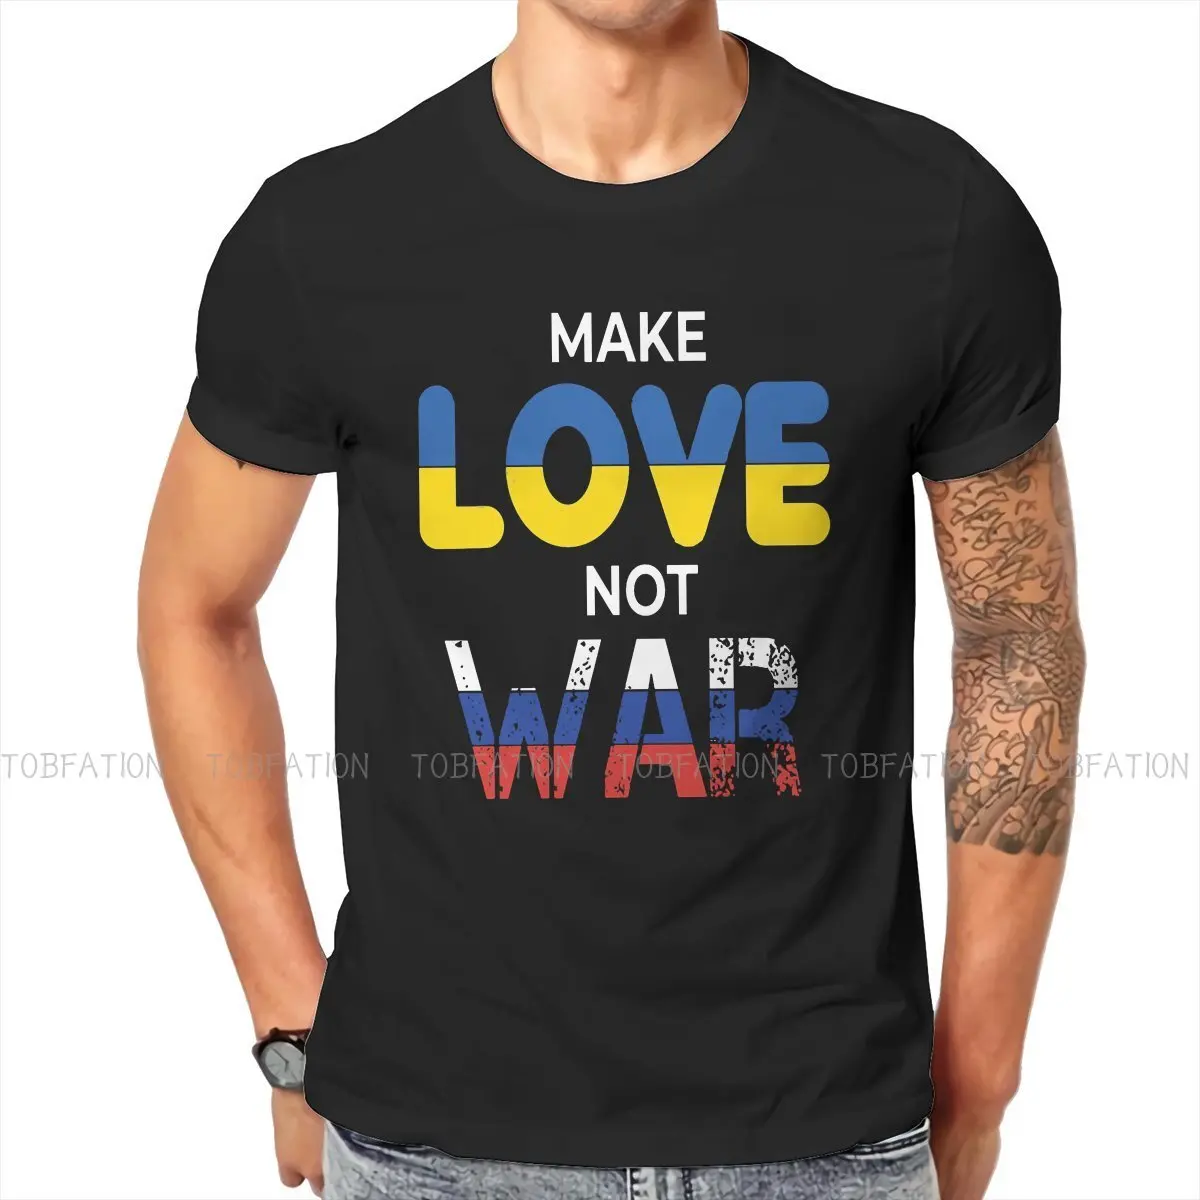 Stop the Wars No War Make Love not War Tshirt Vintage Graphic Men's Tshirts Tops Oversized Cotton Crewneck T Shirt